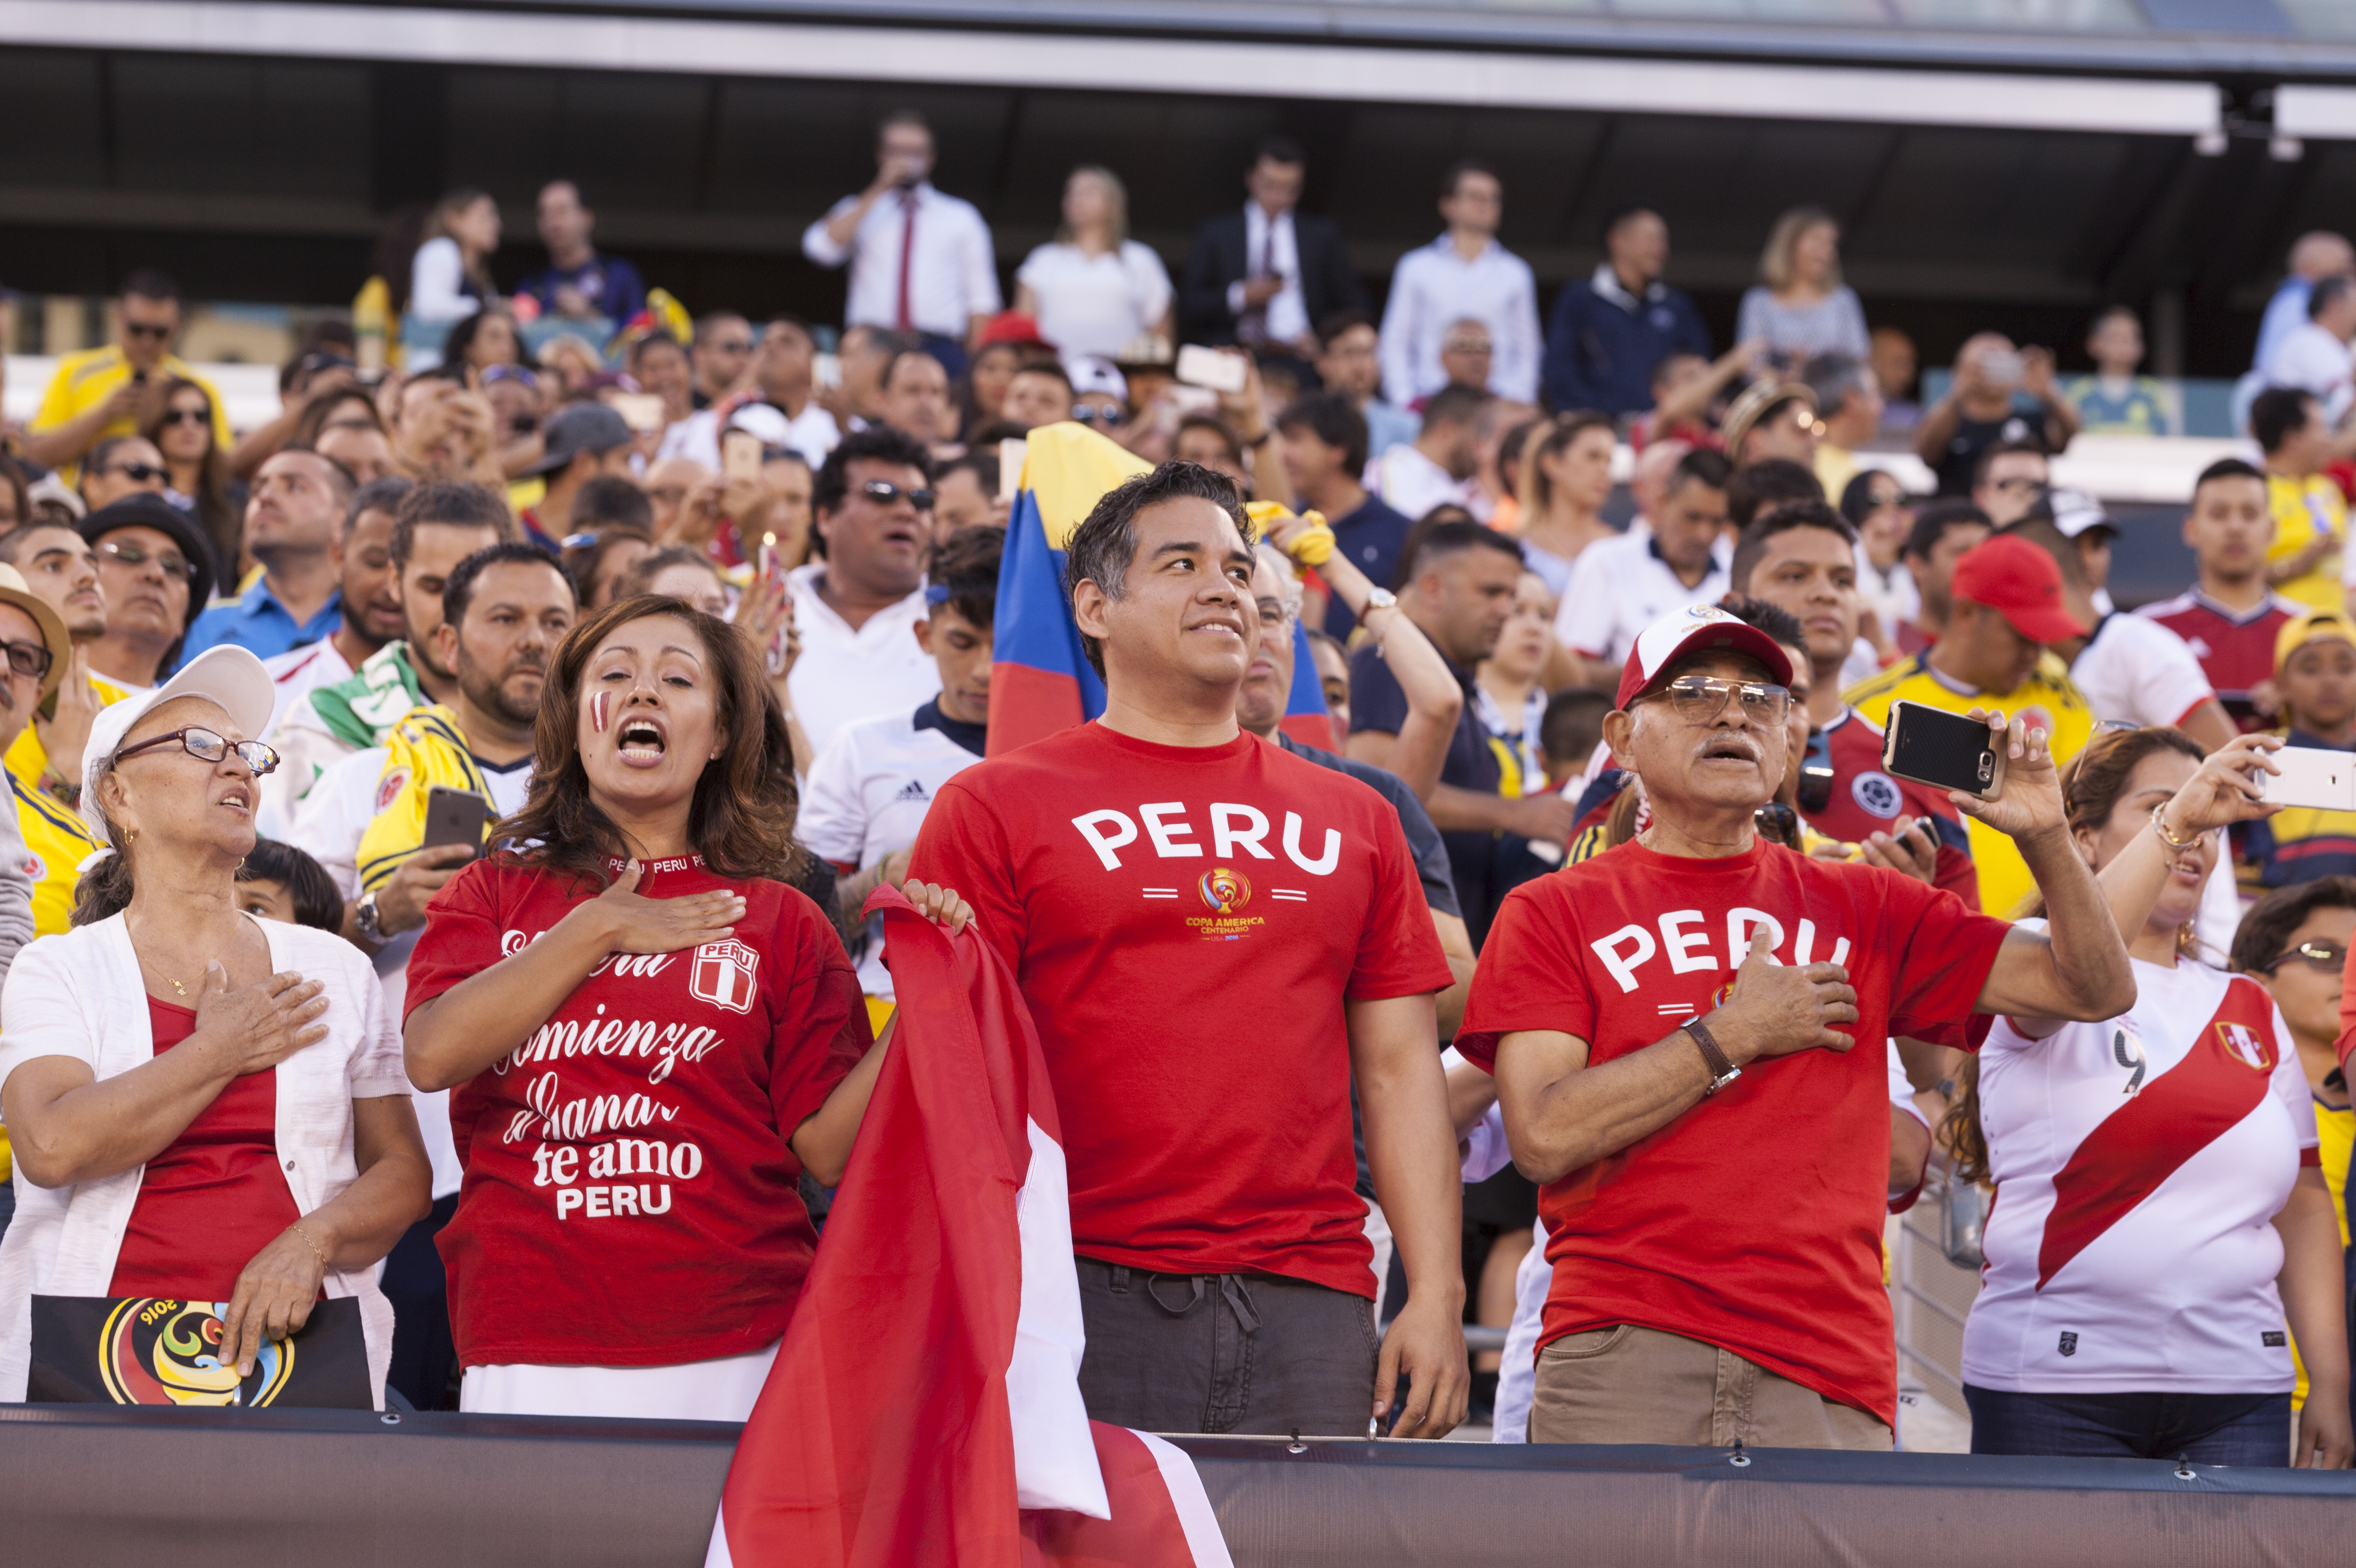 Peru dominates in international friendly as they beat Croatia 2-0